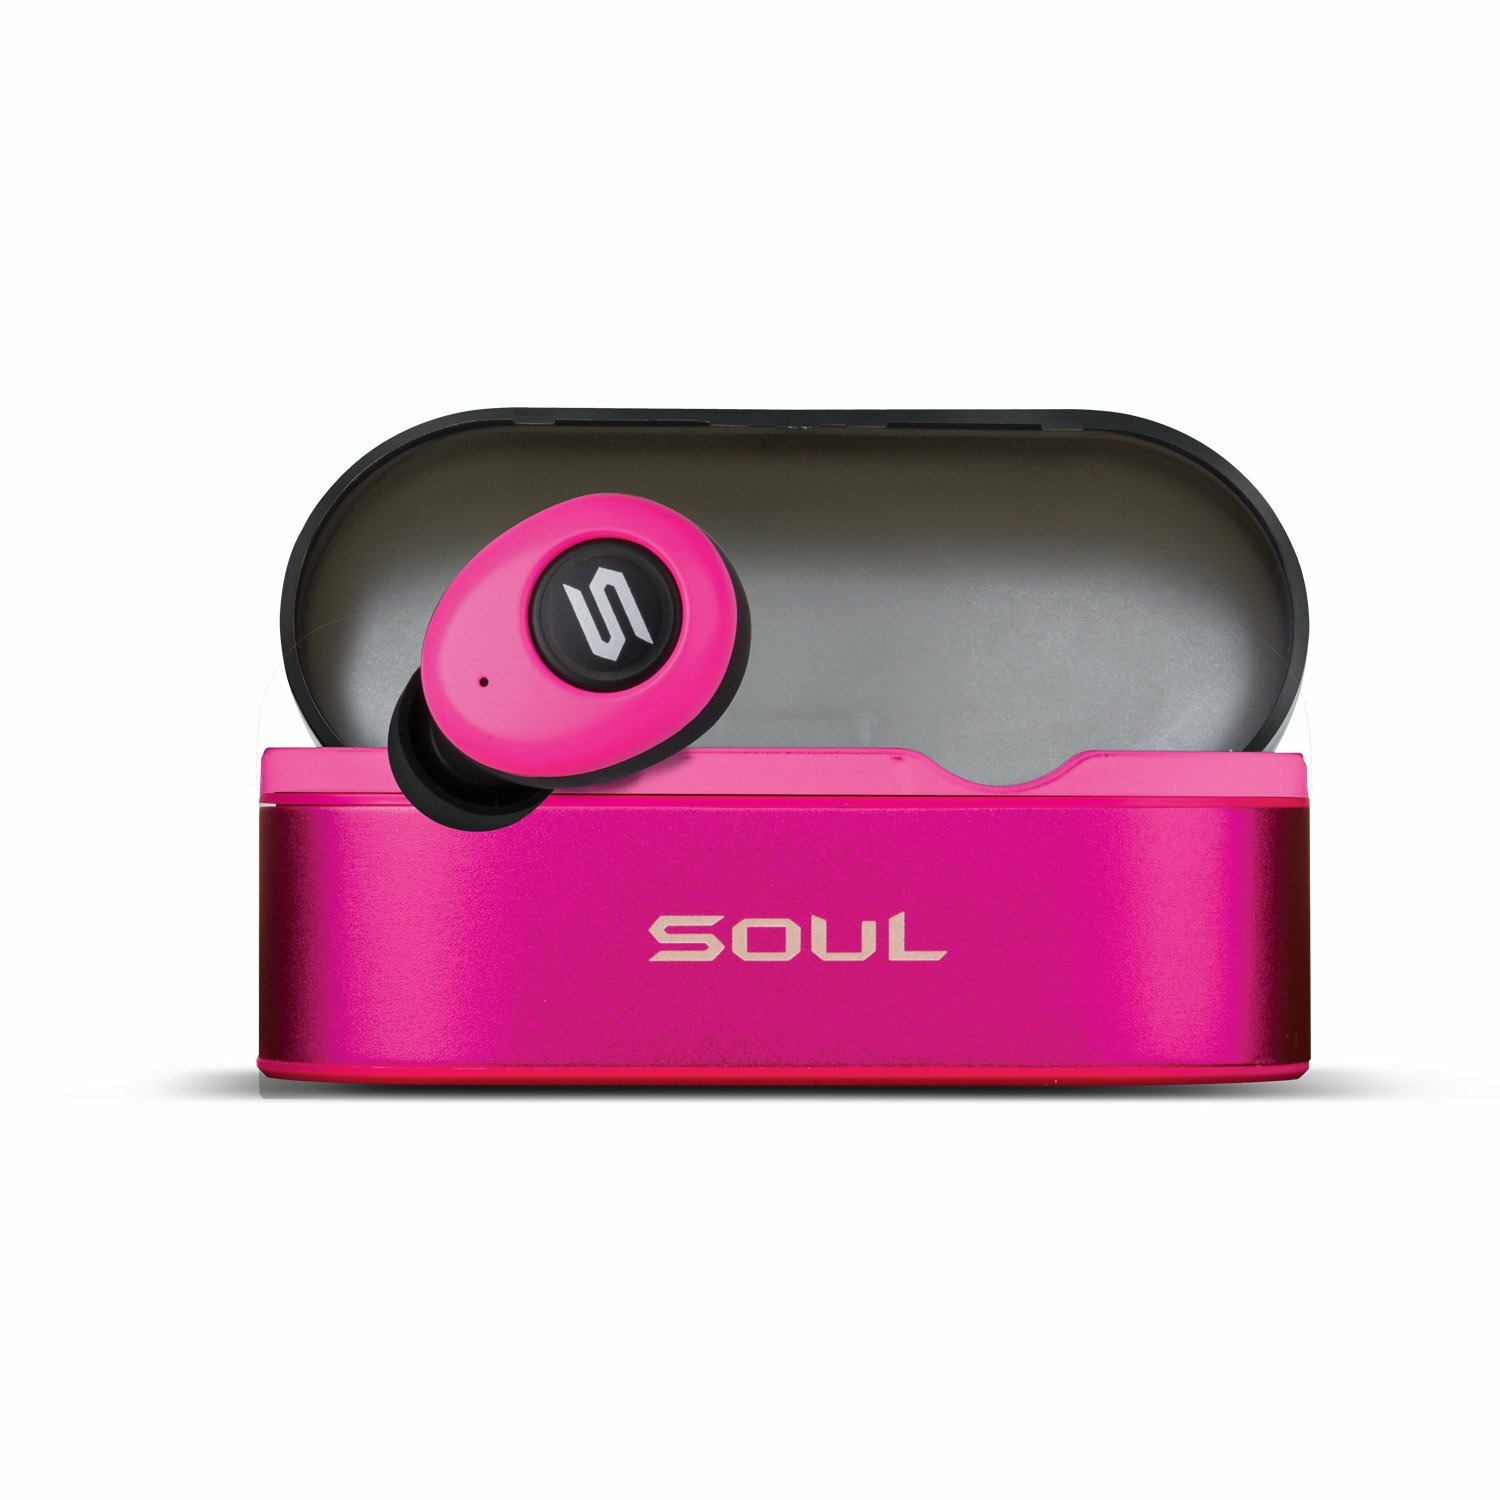 Наушники soul. Беспроводные наушники Soul true. Наушники Soul St-XS 2 розовые. Внутриканальные беспроводные наушники Soul. Наушники Soul s-Fit Pink.